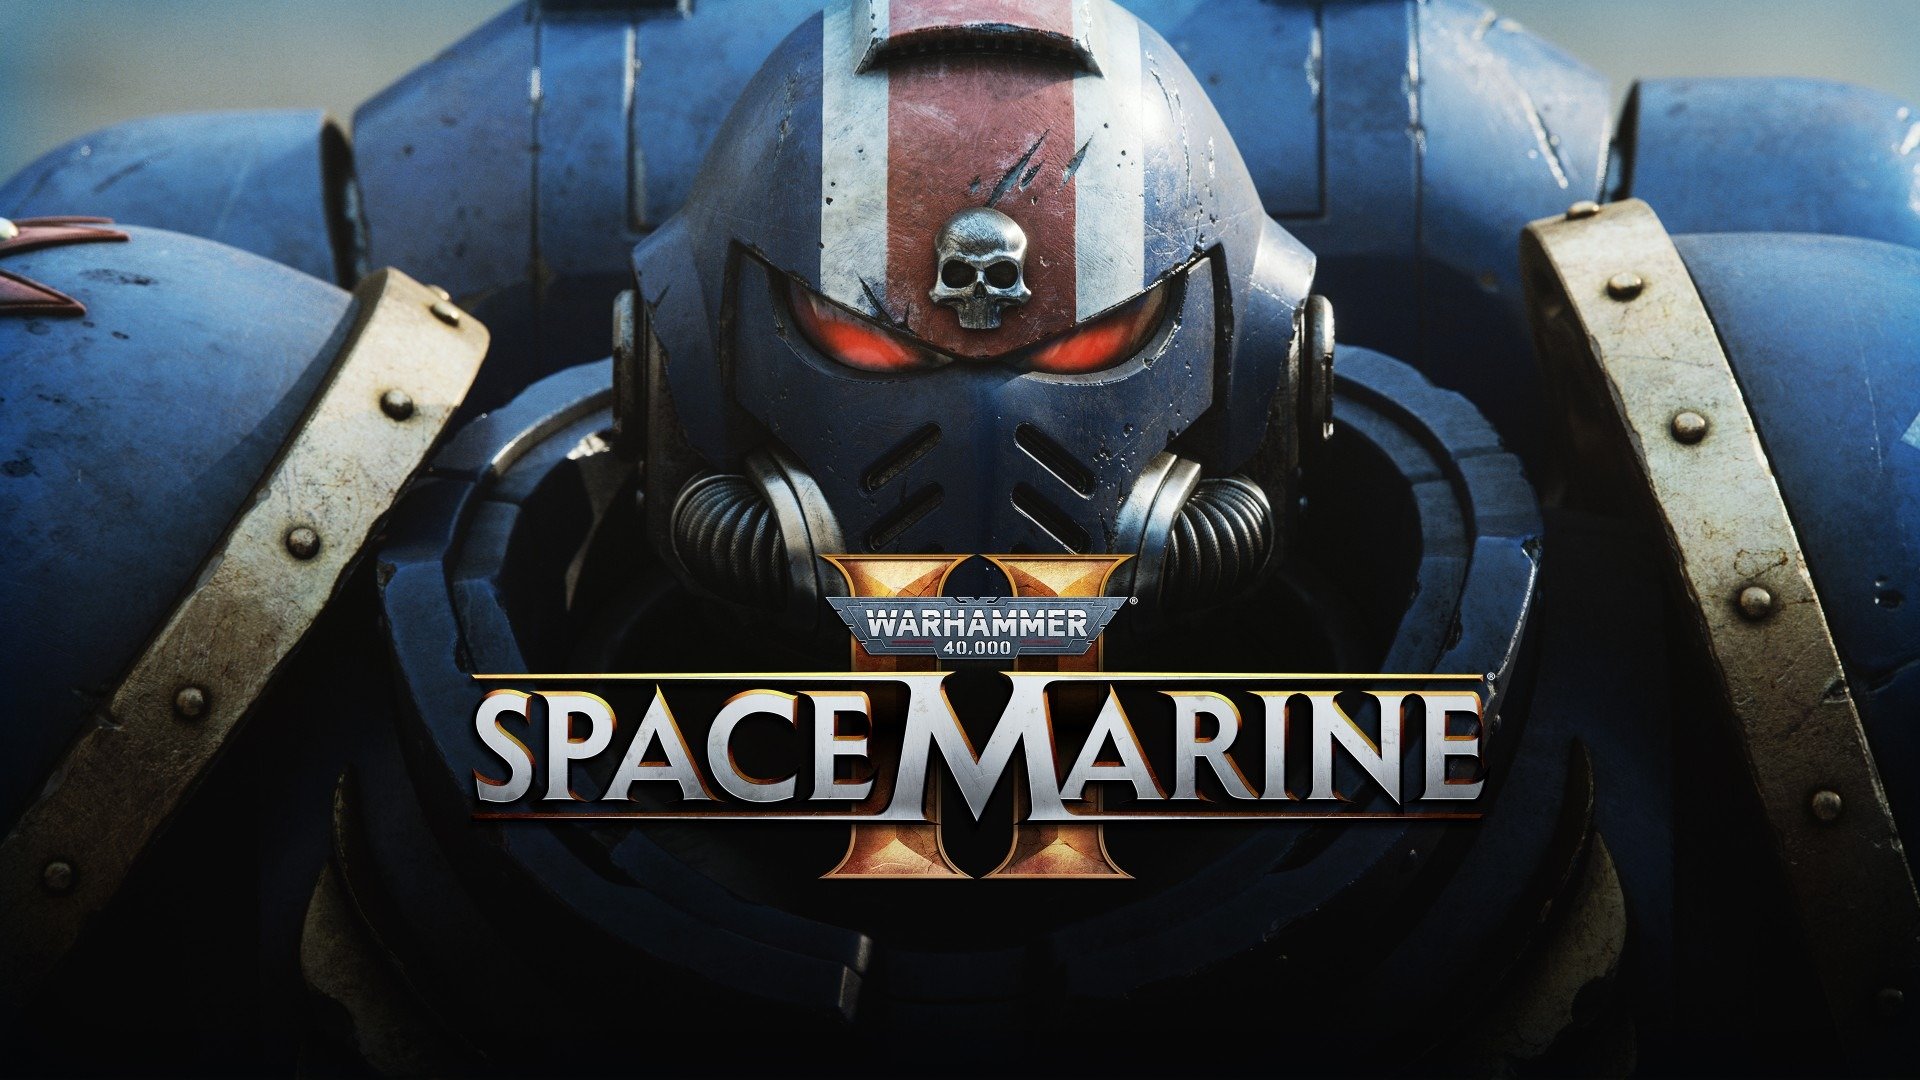 Warhammer Space Marine 2 : du nouveau gameplay qui promet du lourd